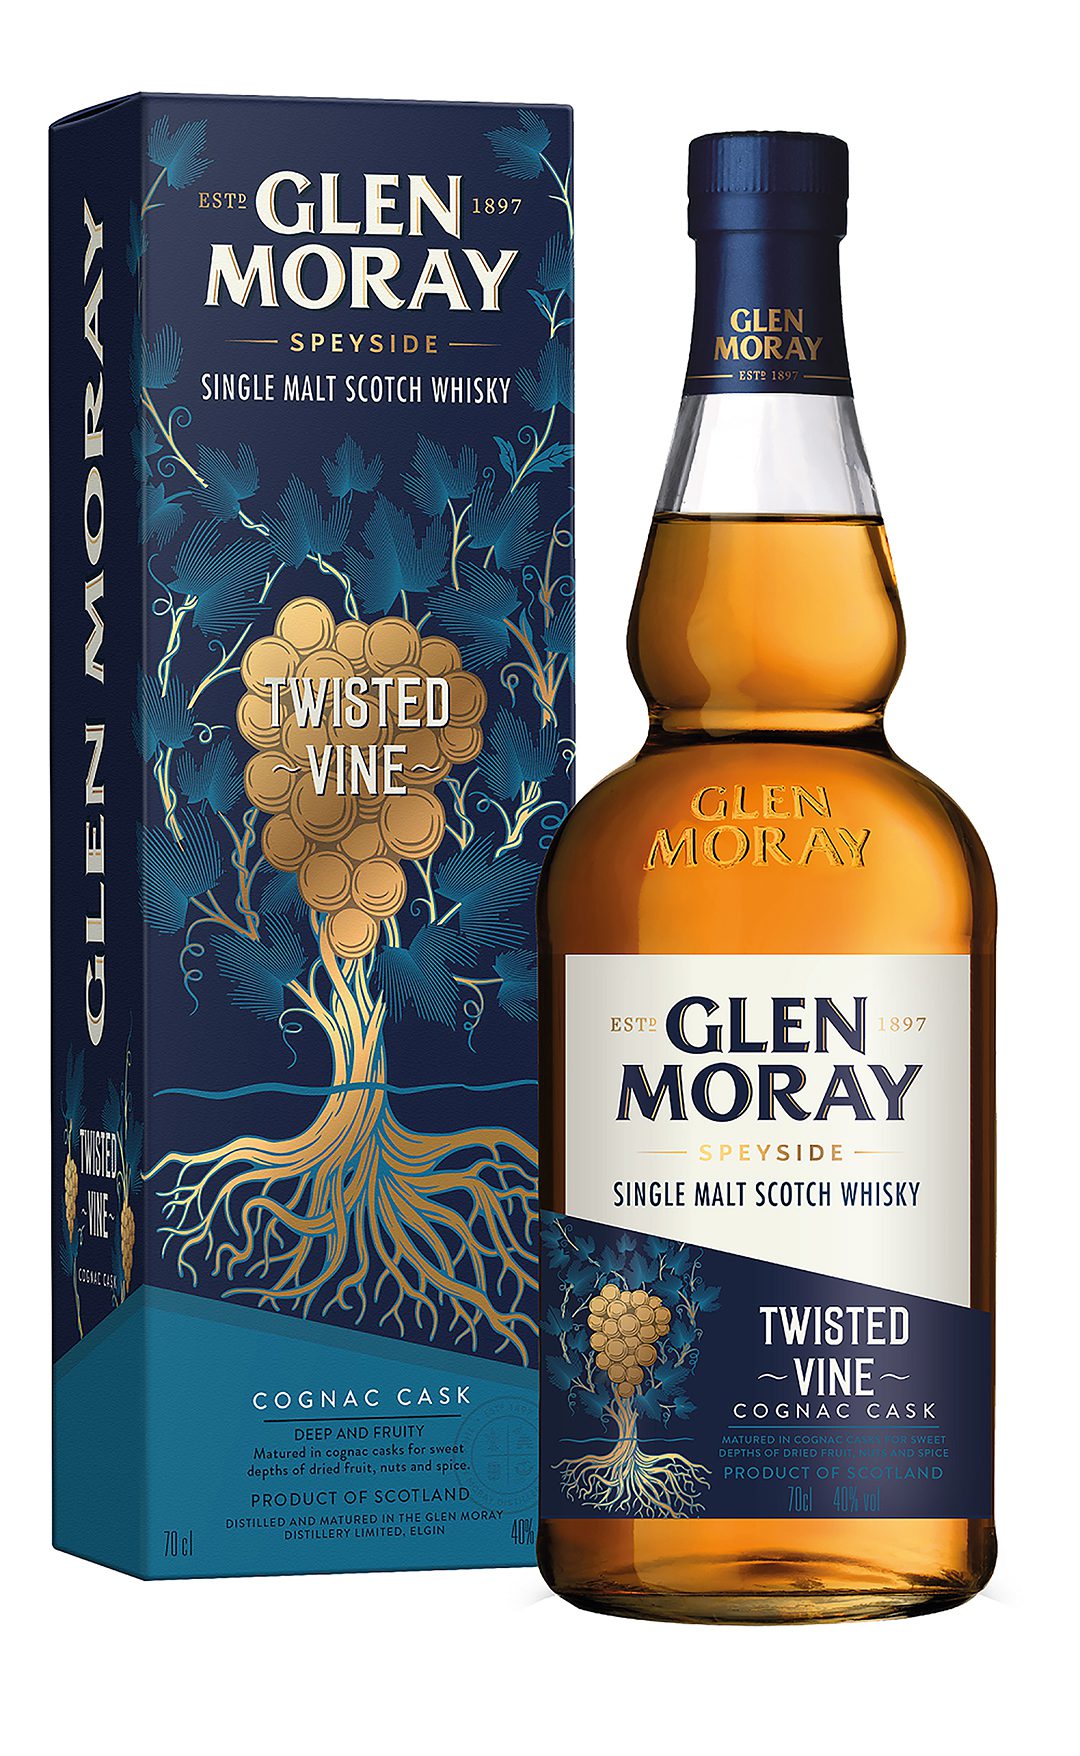 Glen Moray Twisted Vine Single Malt Scotch Whisky, 700ml bottle and packaging.